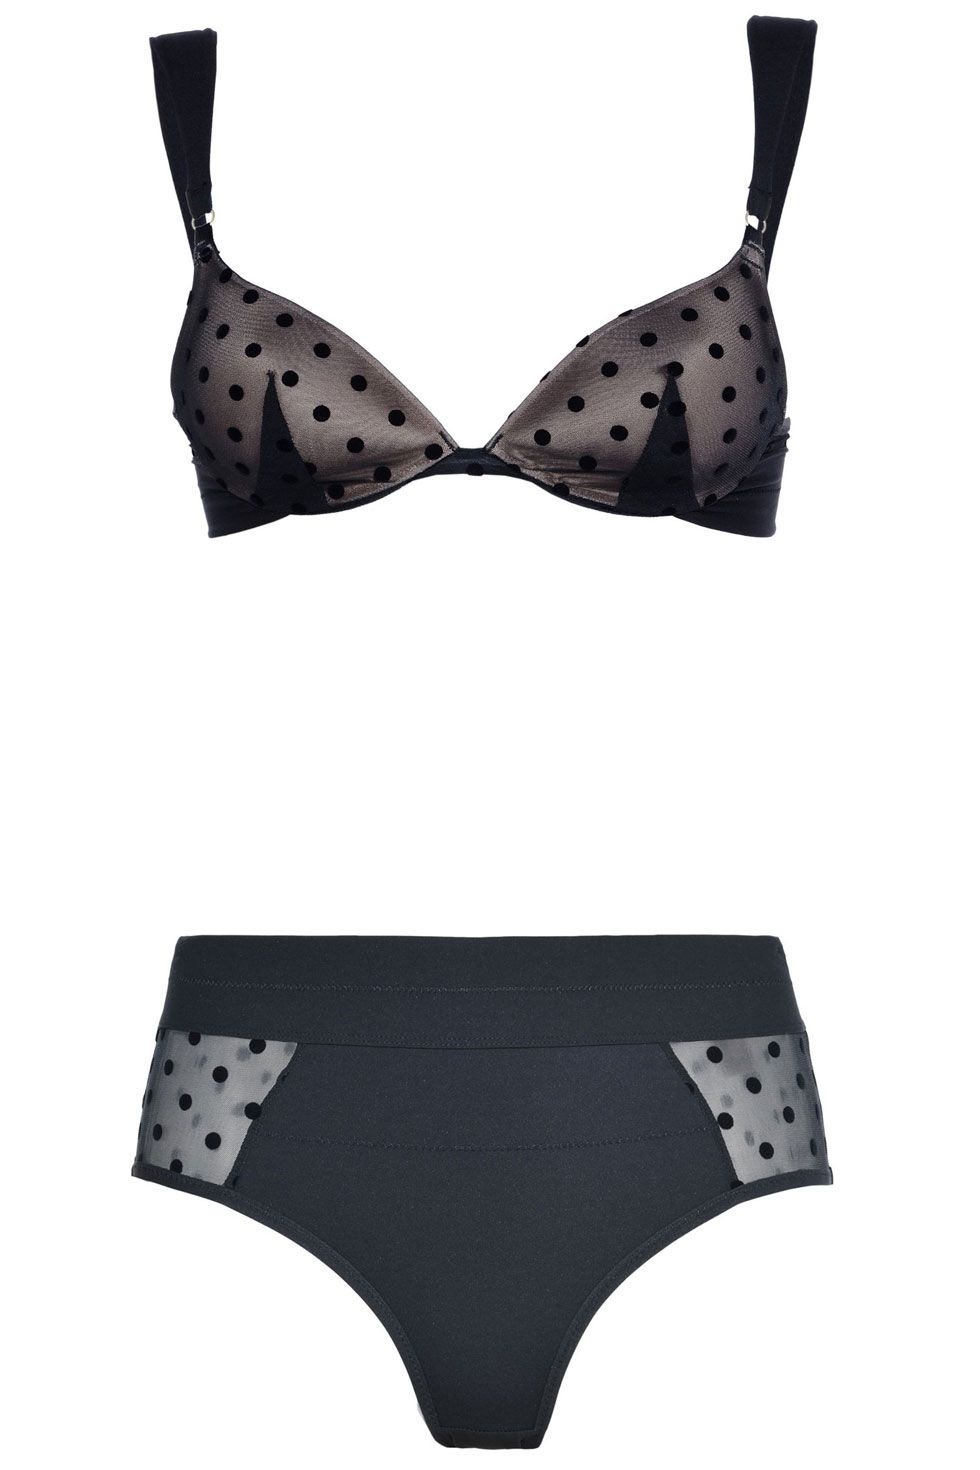 Valentine's gifts for her: Stella McCartney 'Days of the Week' underwear -  my fashion life